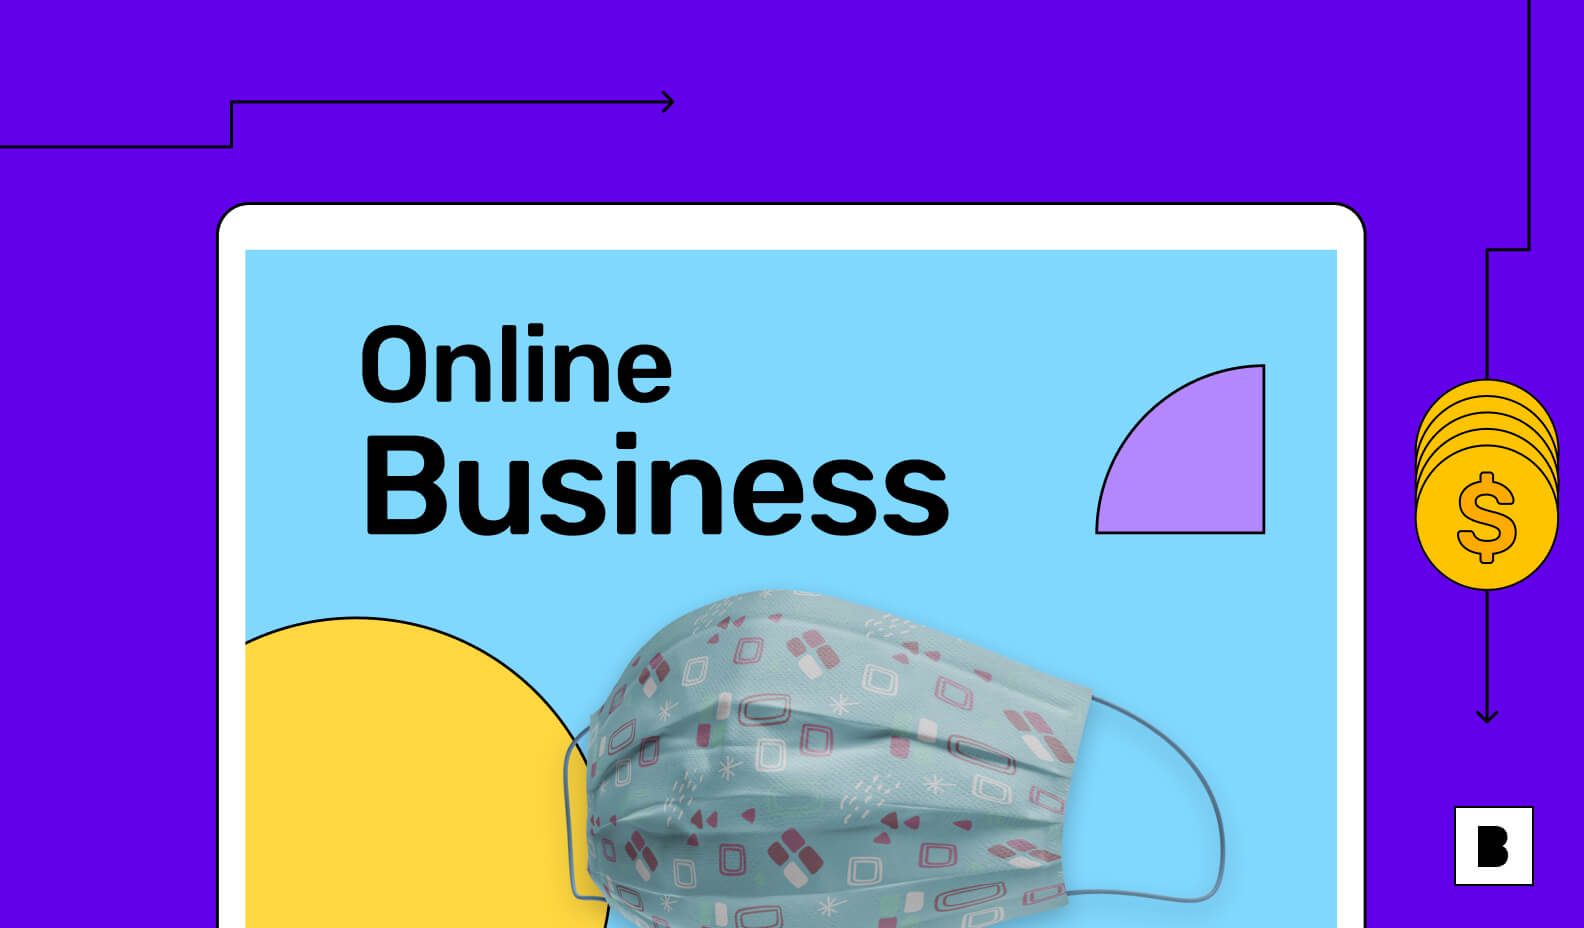 Online businesses